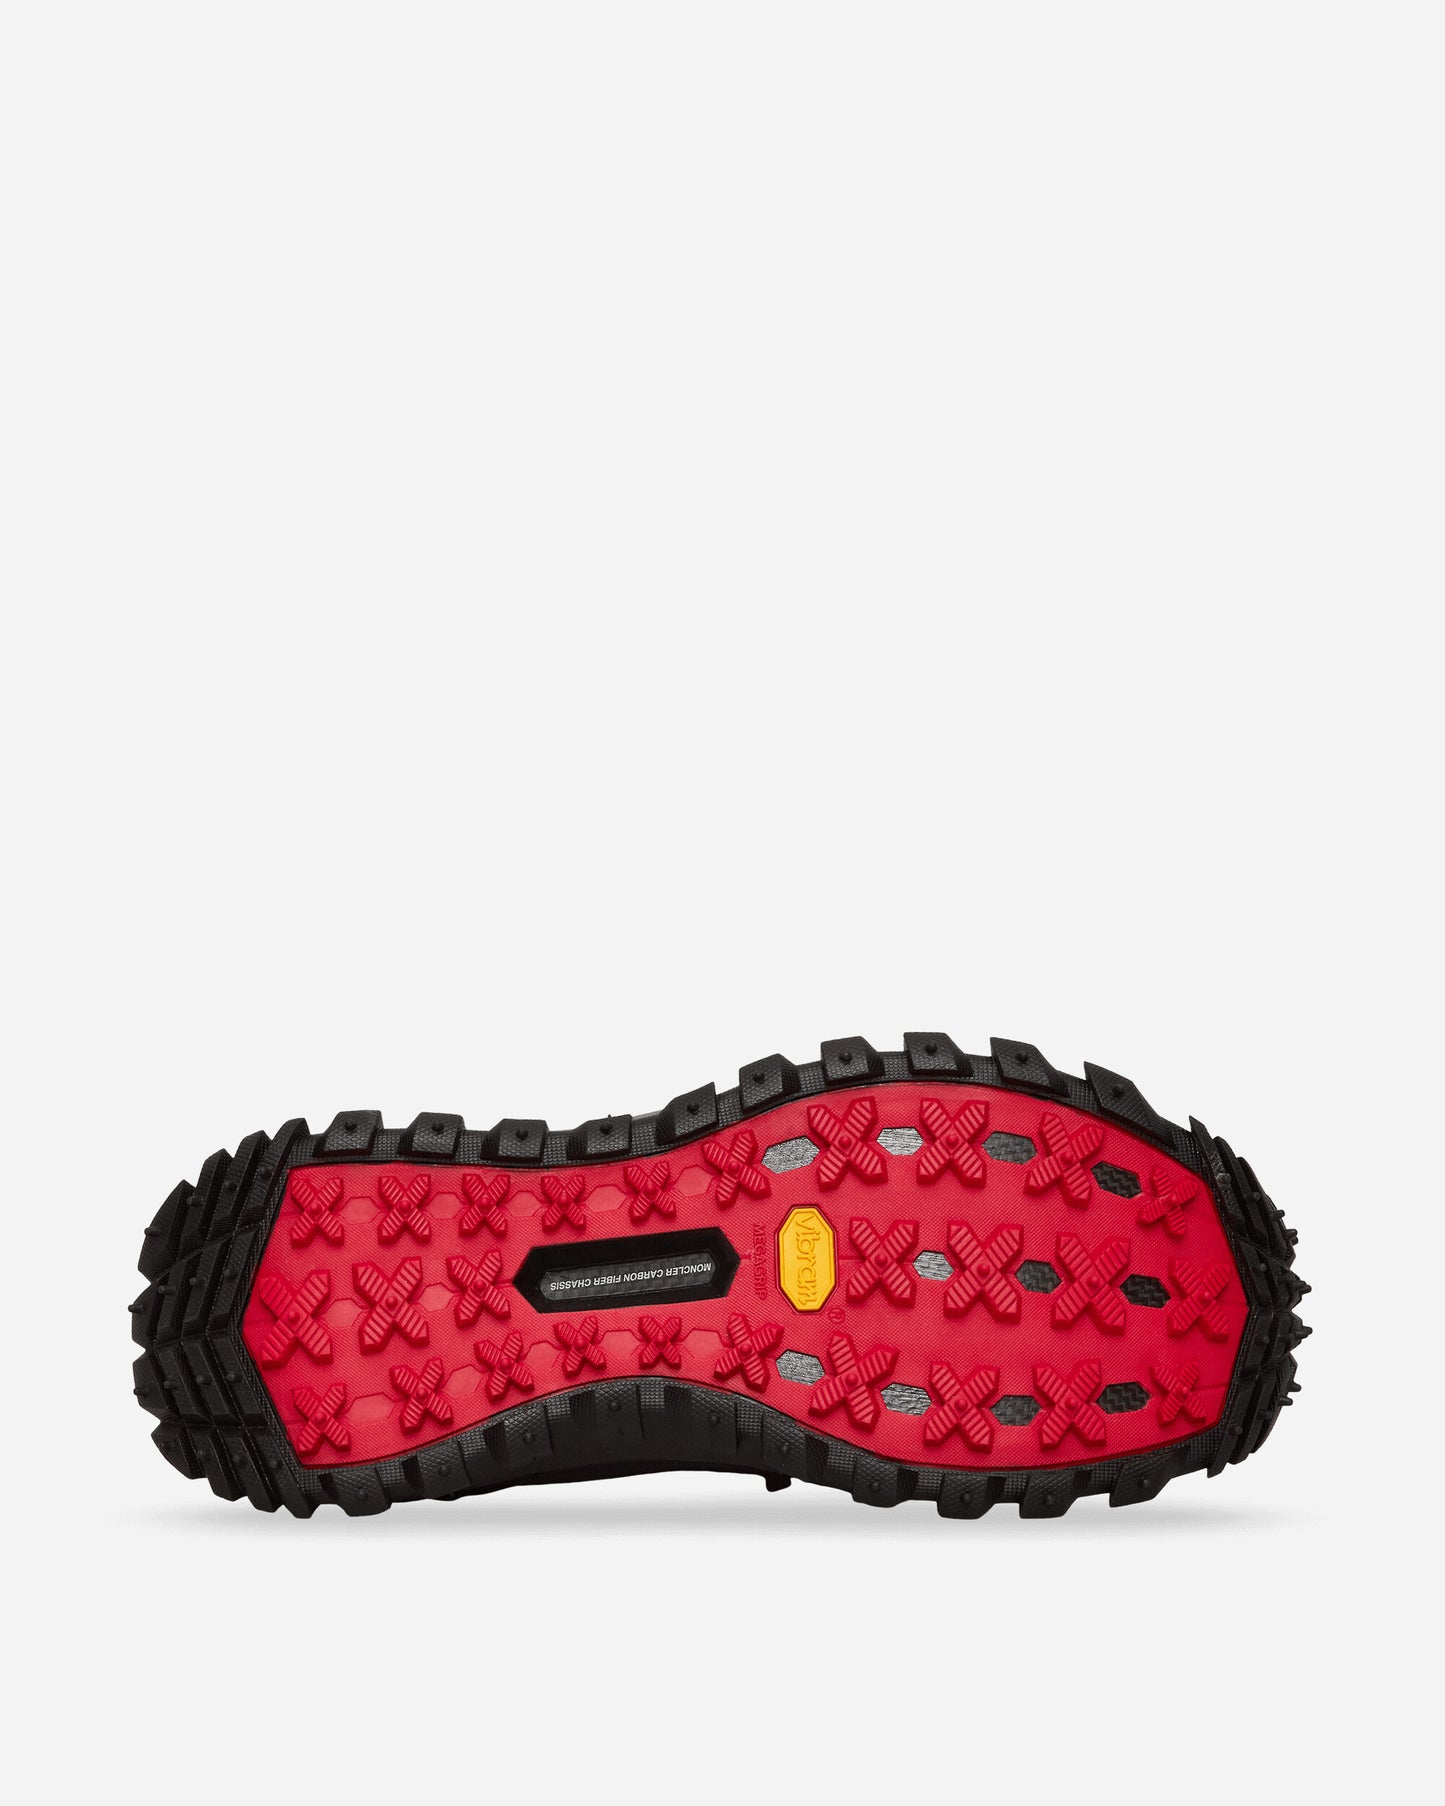 Moncler Genius Puffer Trail Slides Shoes Black Sandals and Slides Slides 4C00010M2490 999